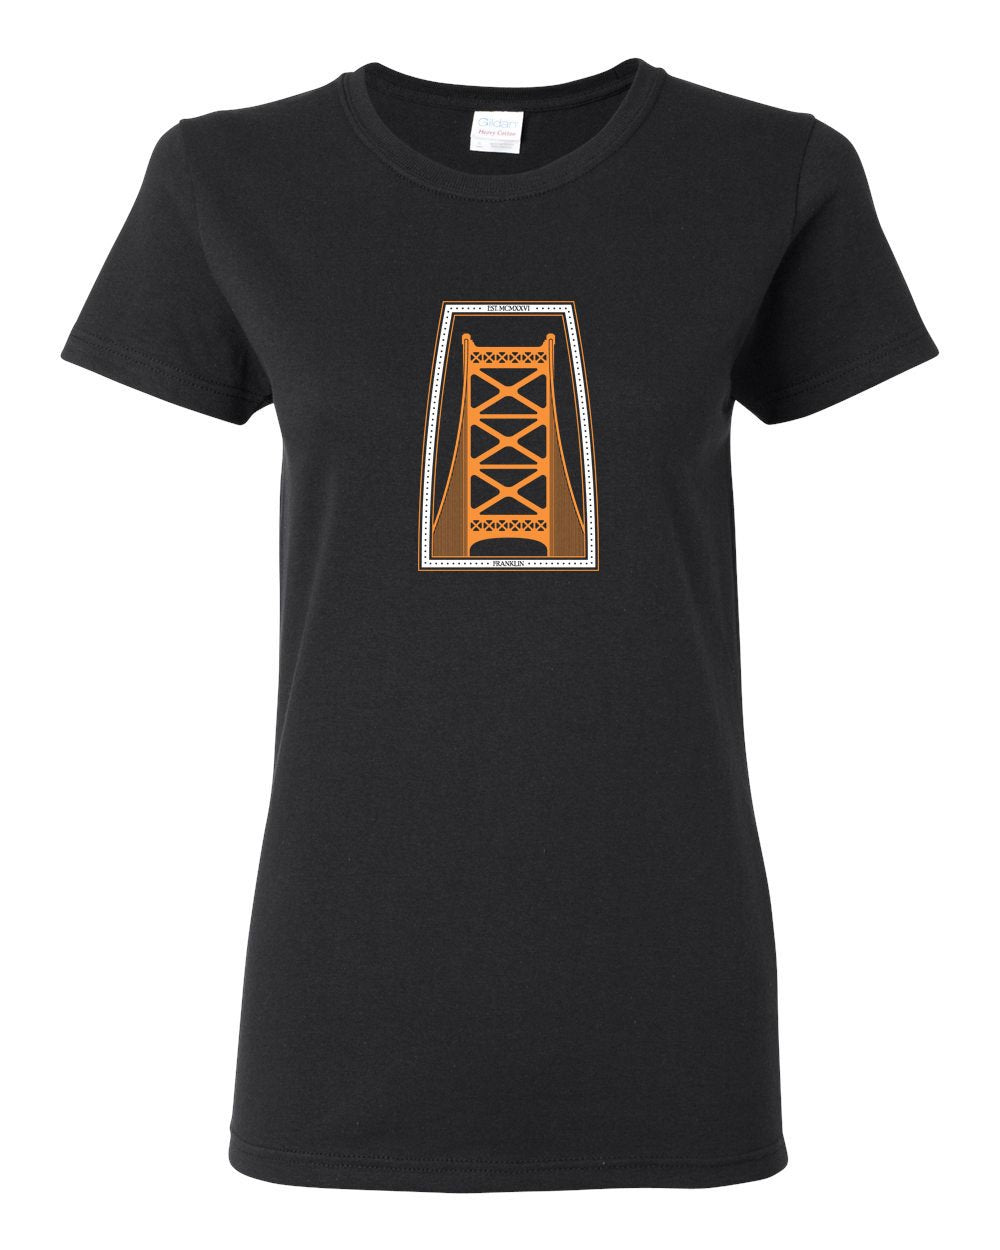 Ben Franklin Bridge Hockey LADIES Missy-Fit T-Shirt